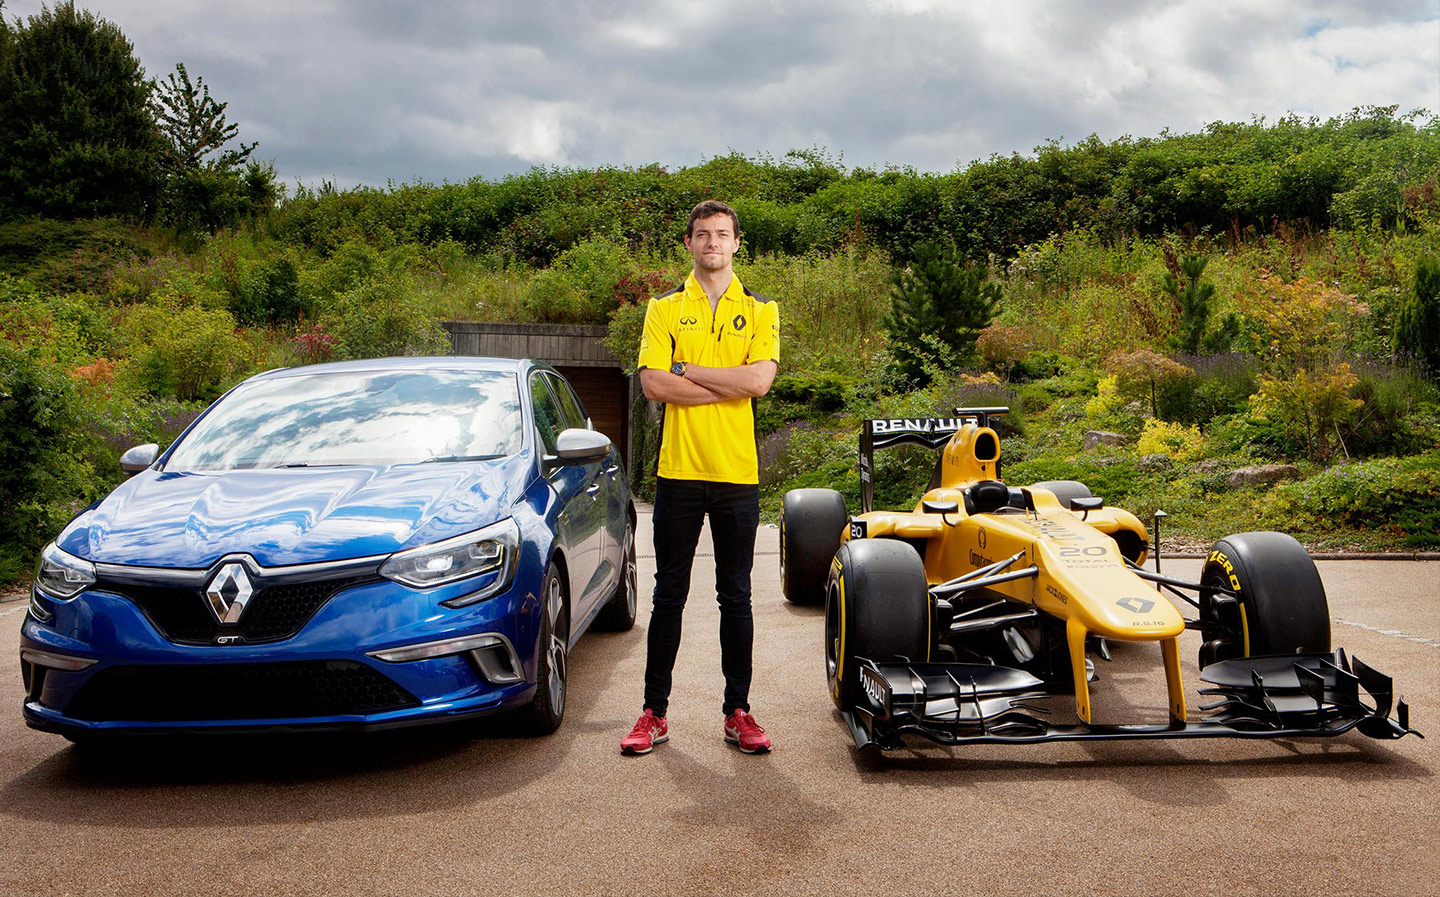 Me and My Motor: Jolyon Palmer, Renault F1 driver